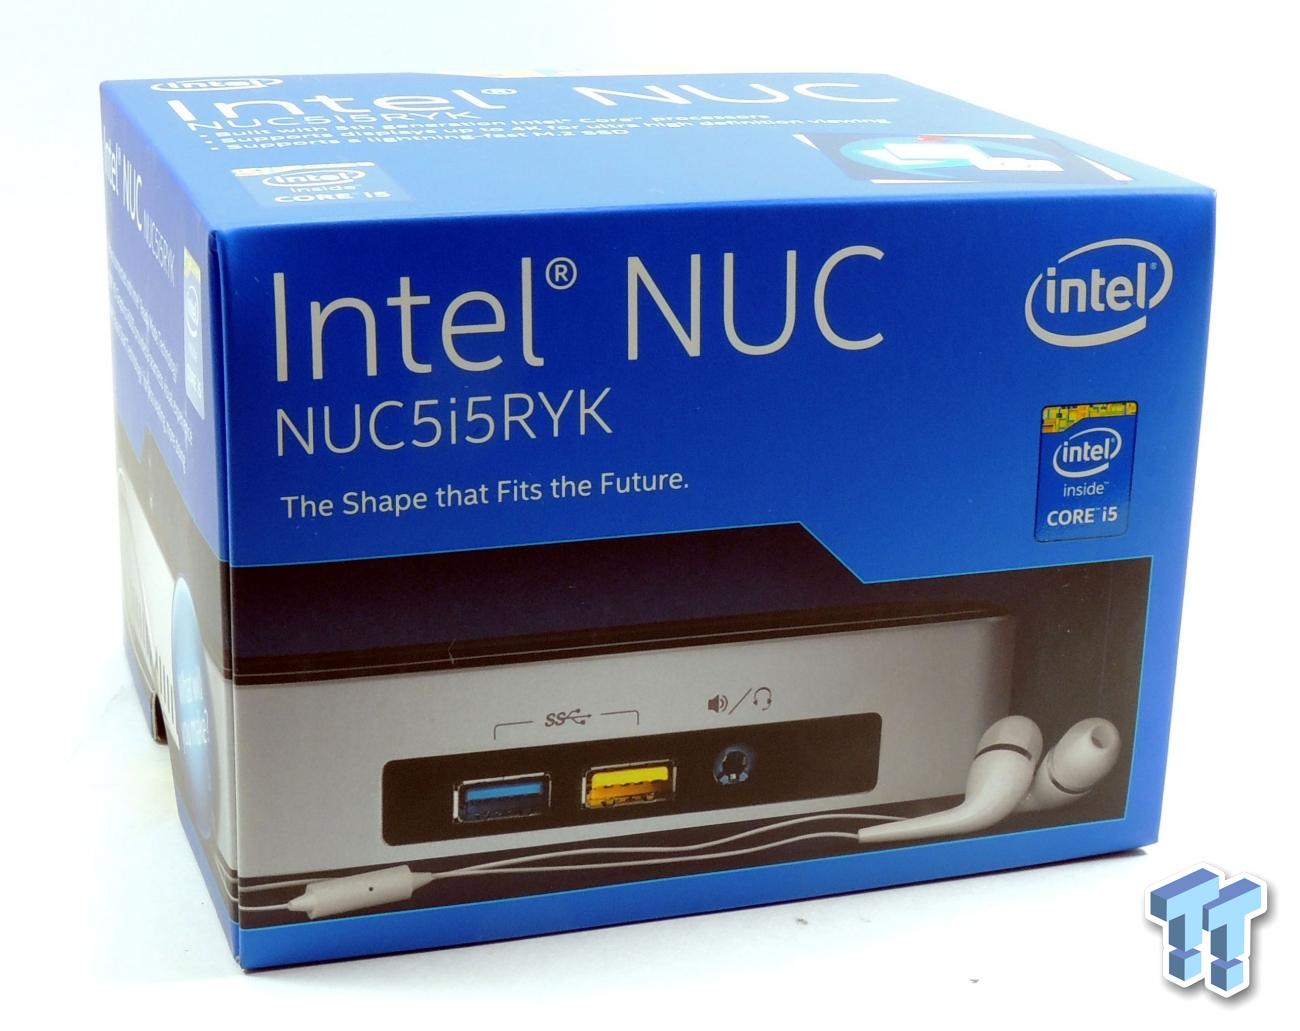 Intel NUC Core i5 Mini PC review 